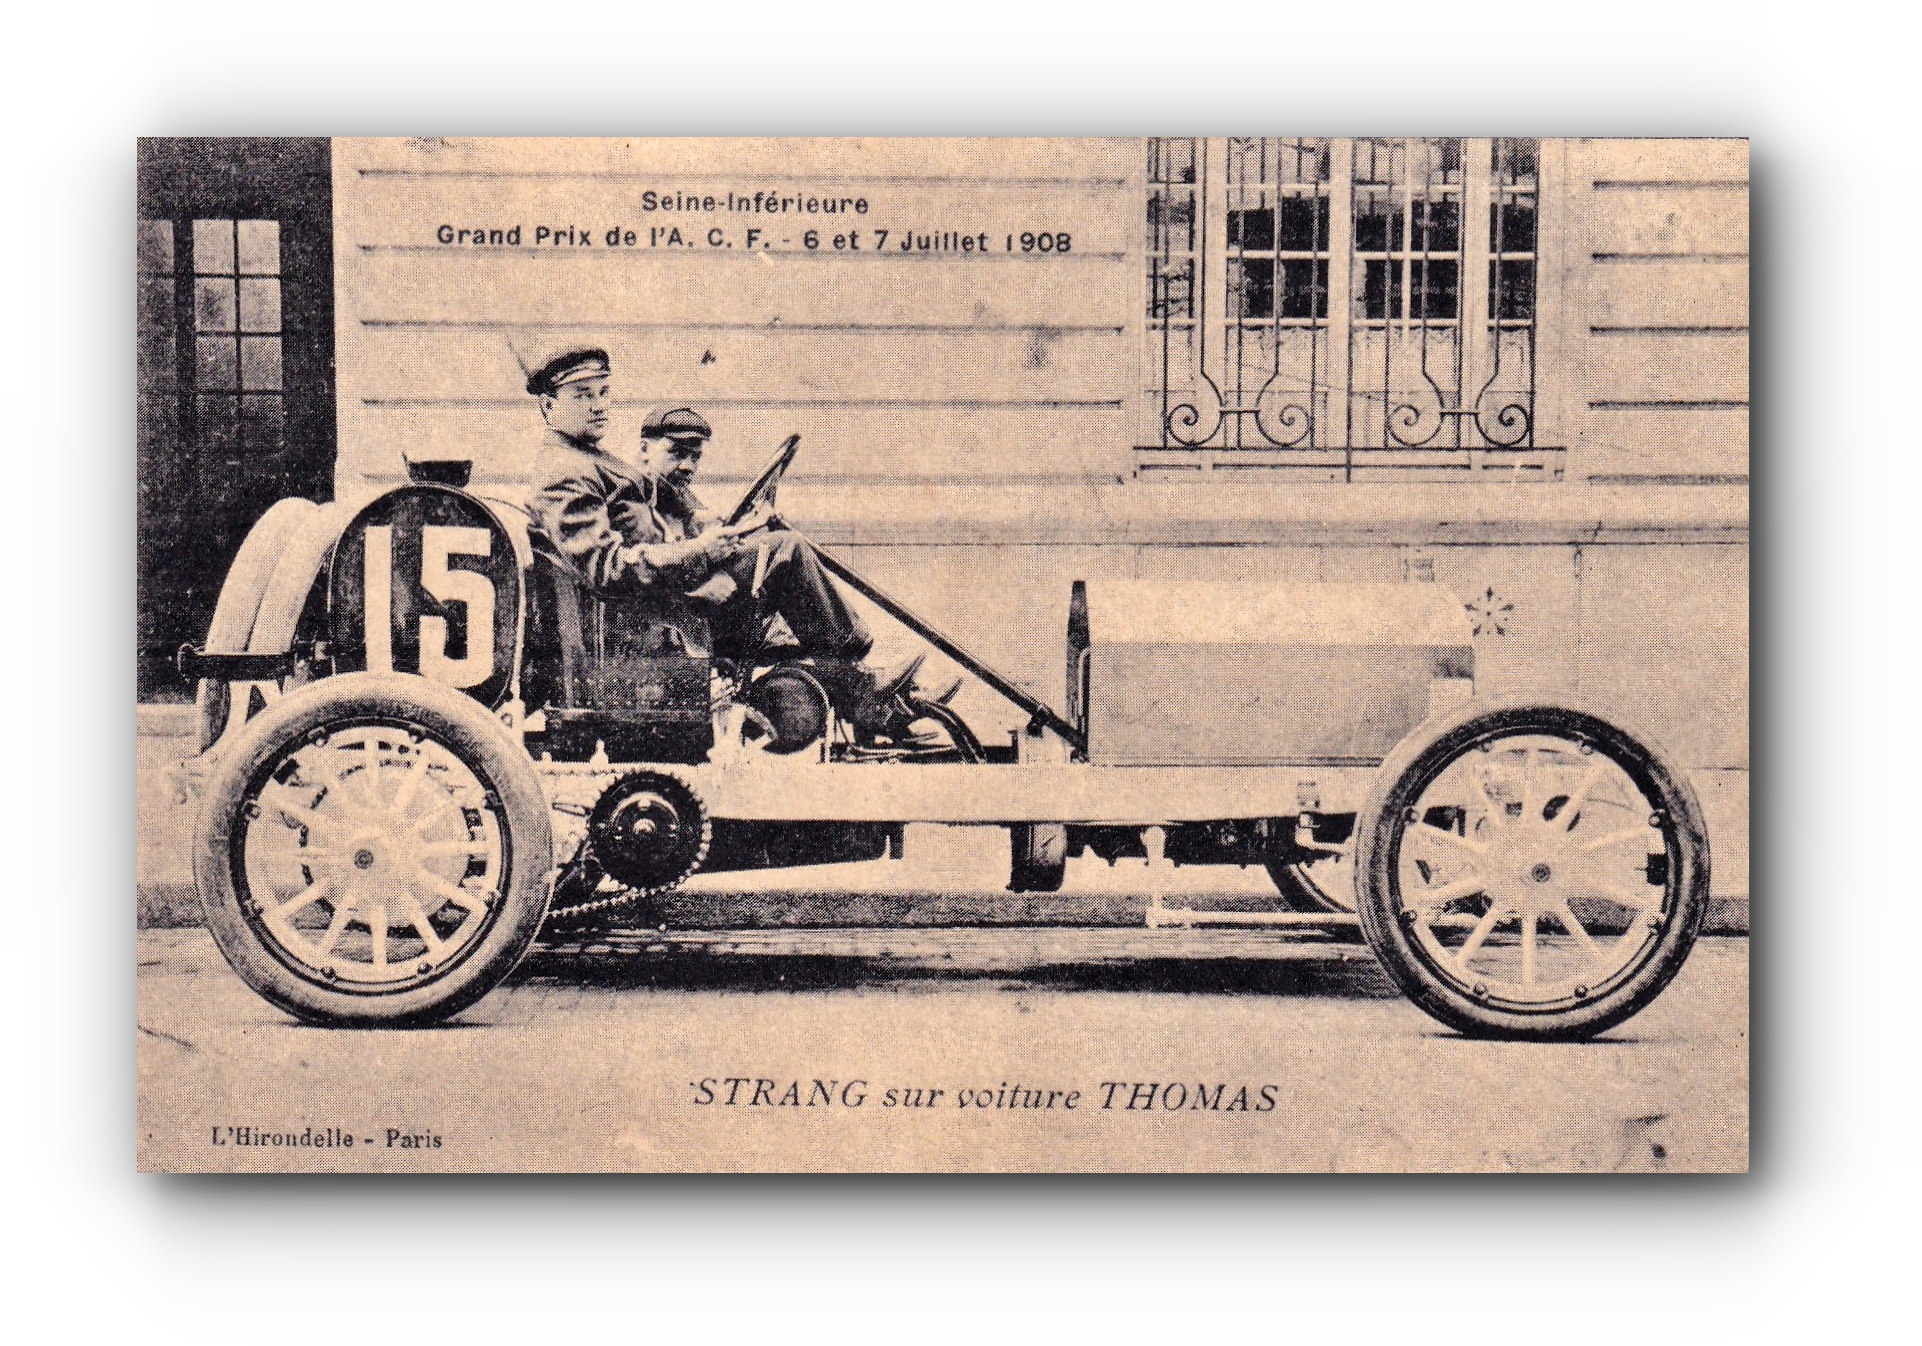 STRANG in einem Thomas Auto - 1908 - STRANG sur voiture Thomas - STRANG in a Thomas car